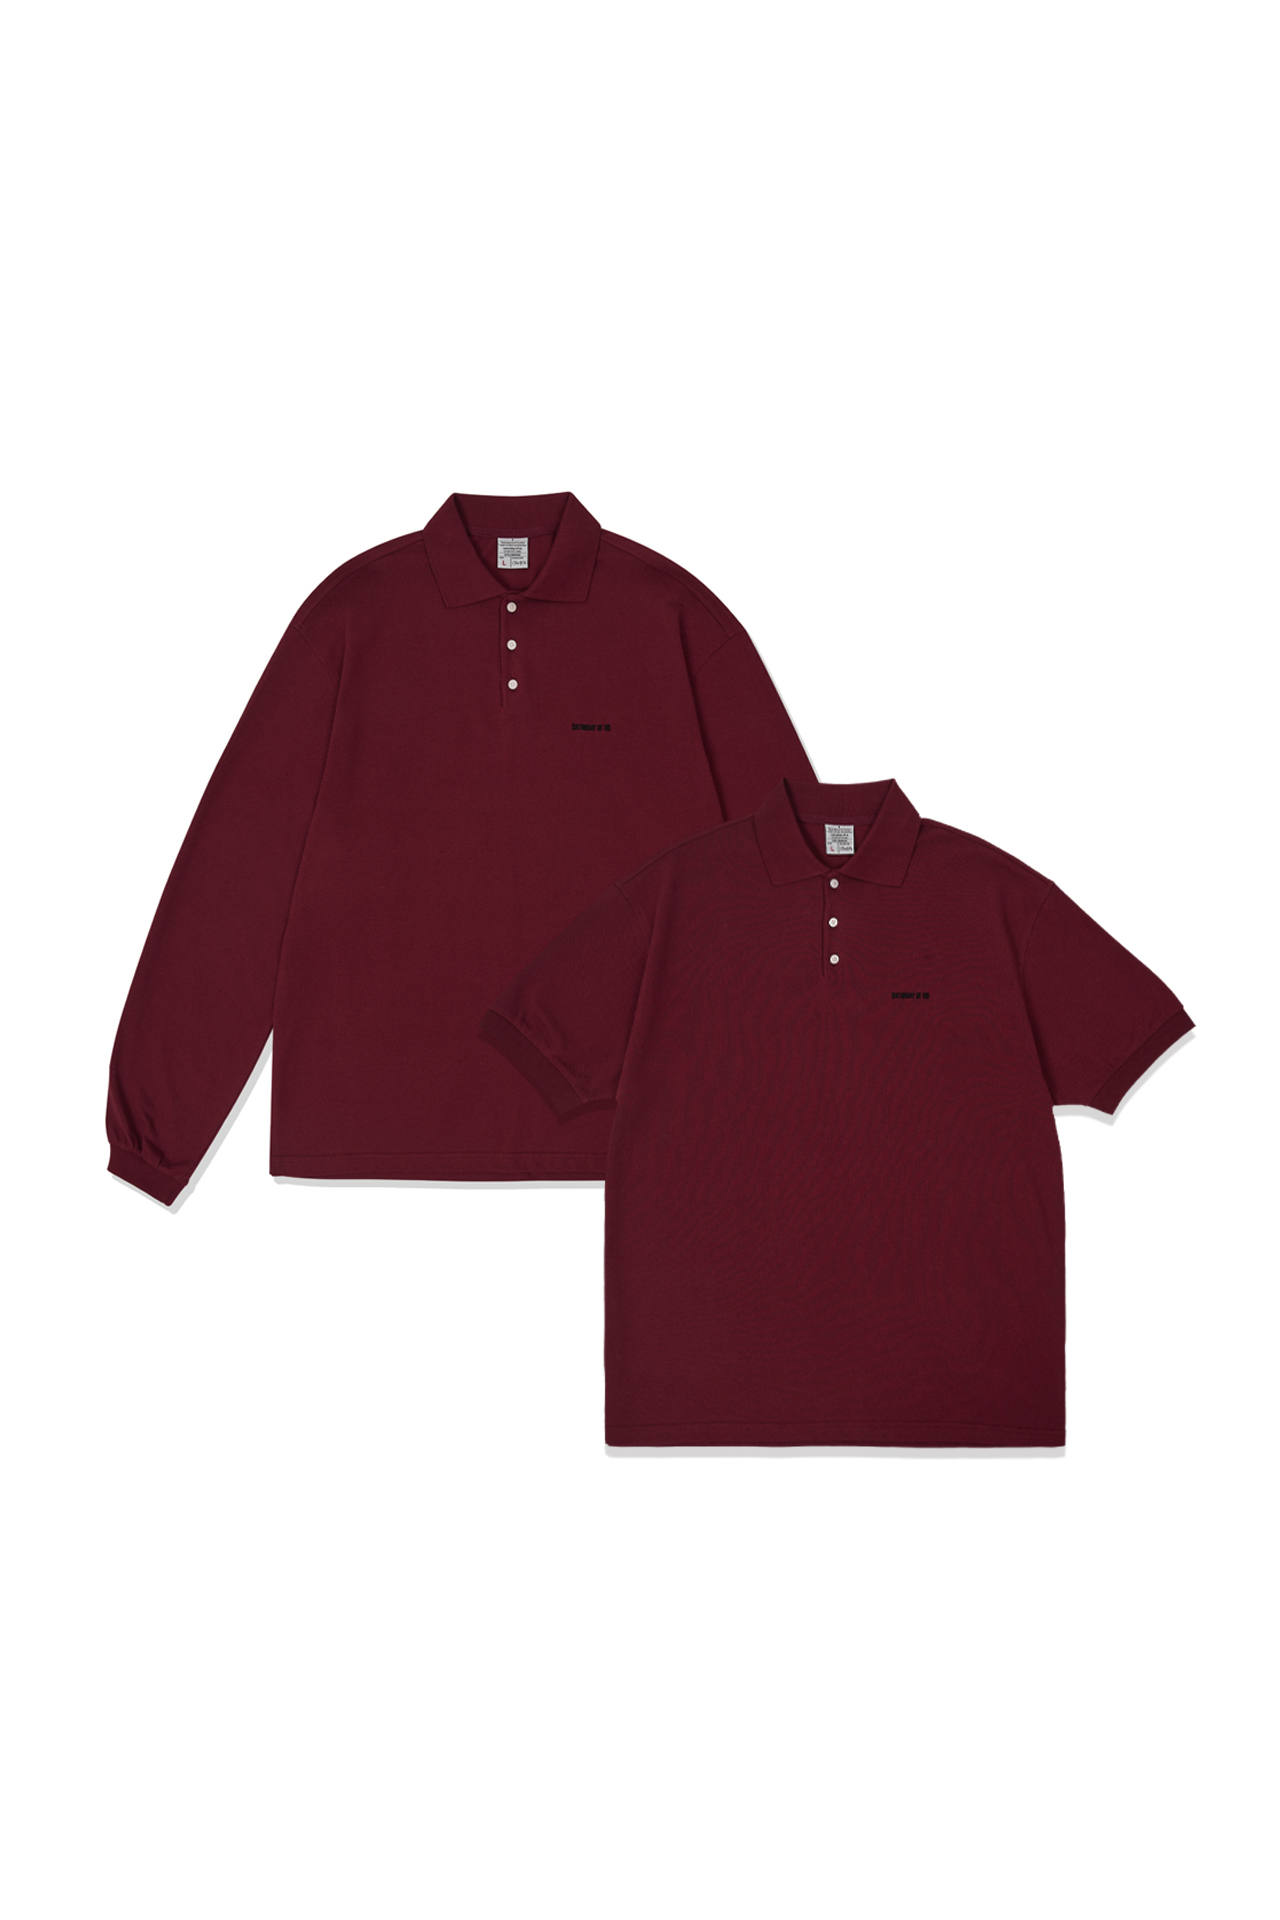 Layered PK Polo Shirt Burgundy (Short Sleeve, Long Sleeve Set)